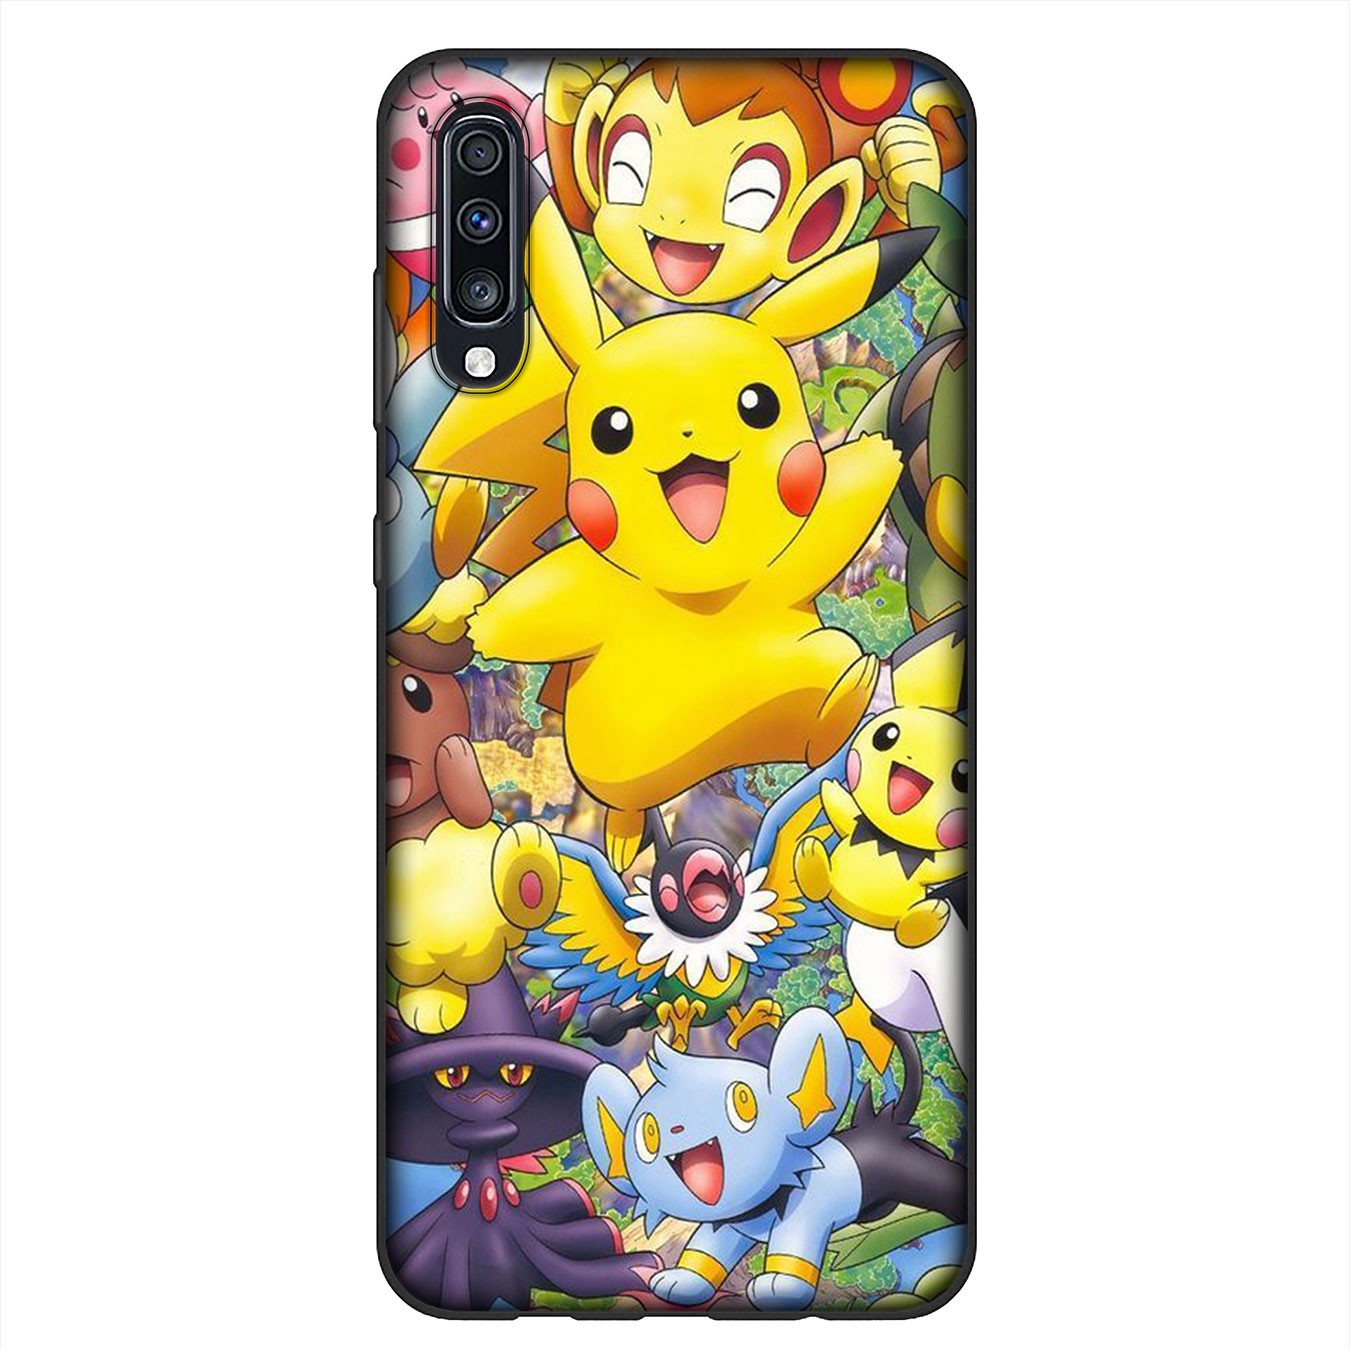 Soft Silicone Samsung Galaxy Note 20 Ultra 10 Plus Lite 9 8 A11 A51 A71 + Phone Case Pokémon Pikachu Casing